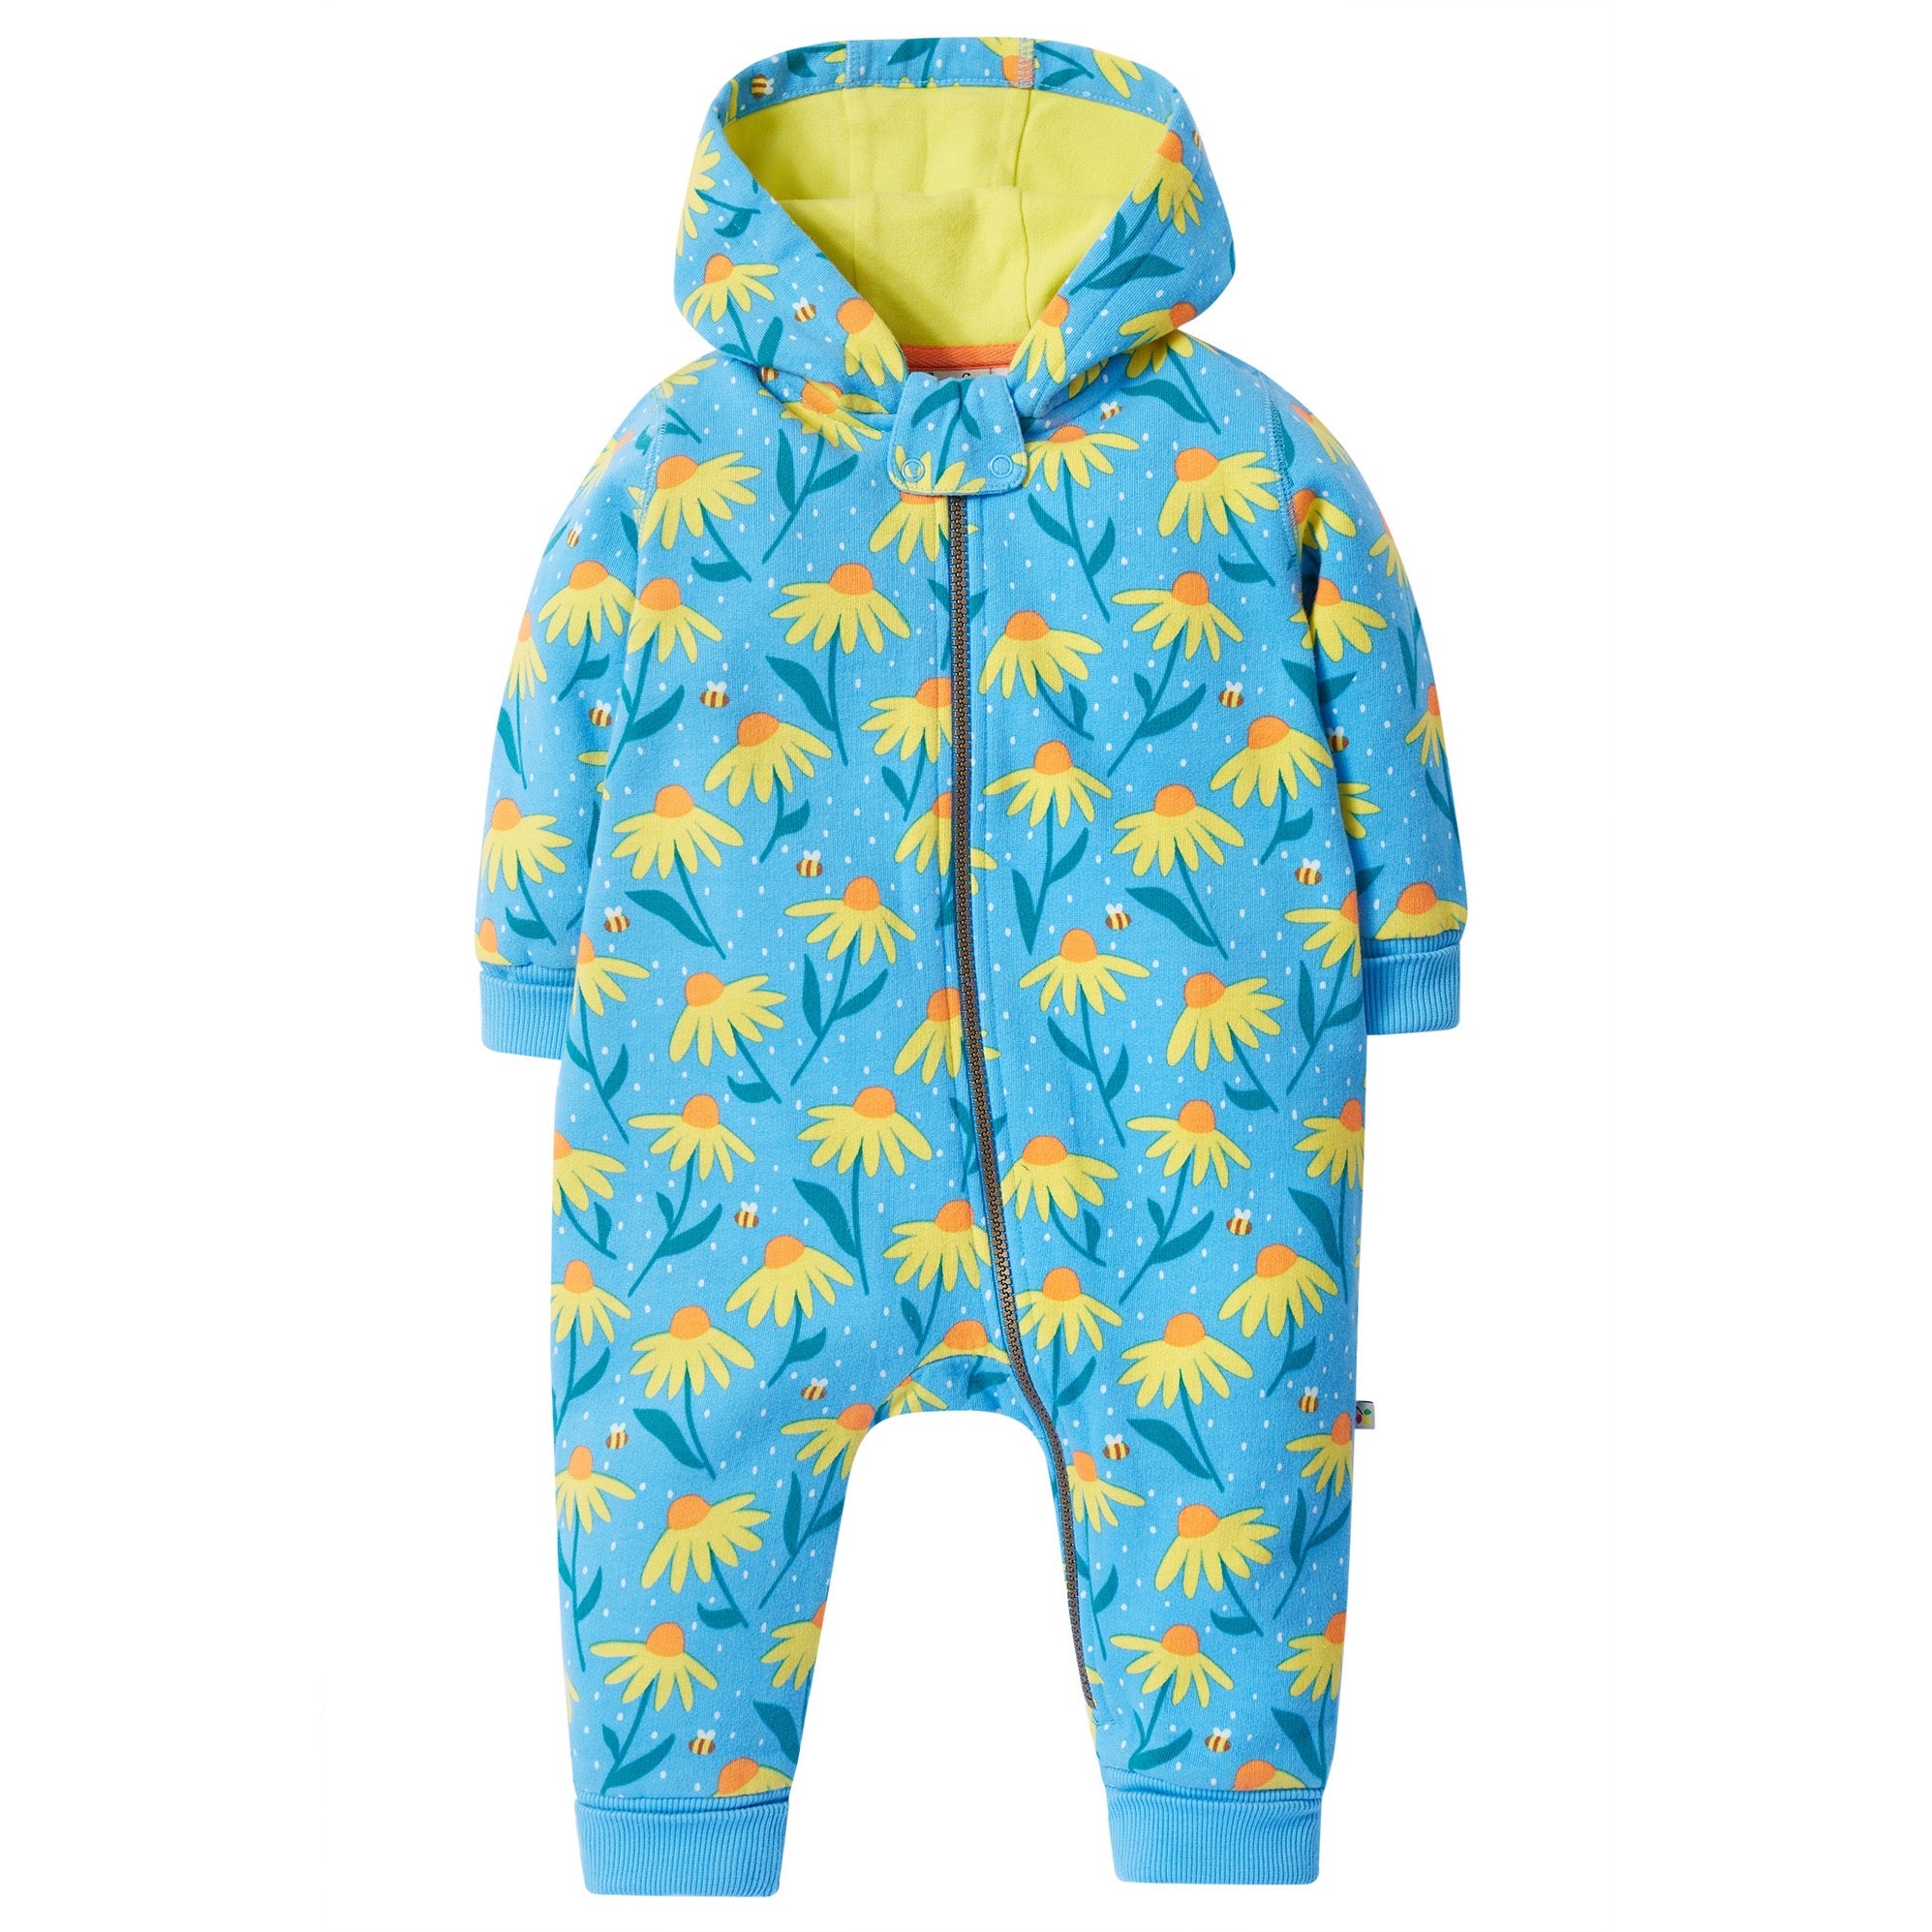 Frugi Infant Snugglesuit Om8bk Echinacea Clothing 2-3YRS / Blue,3-4YRS / Blue